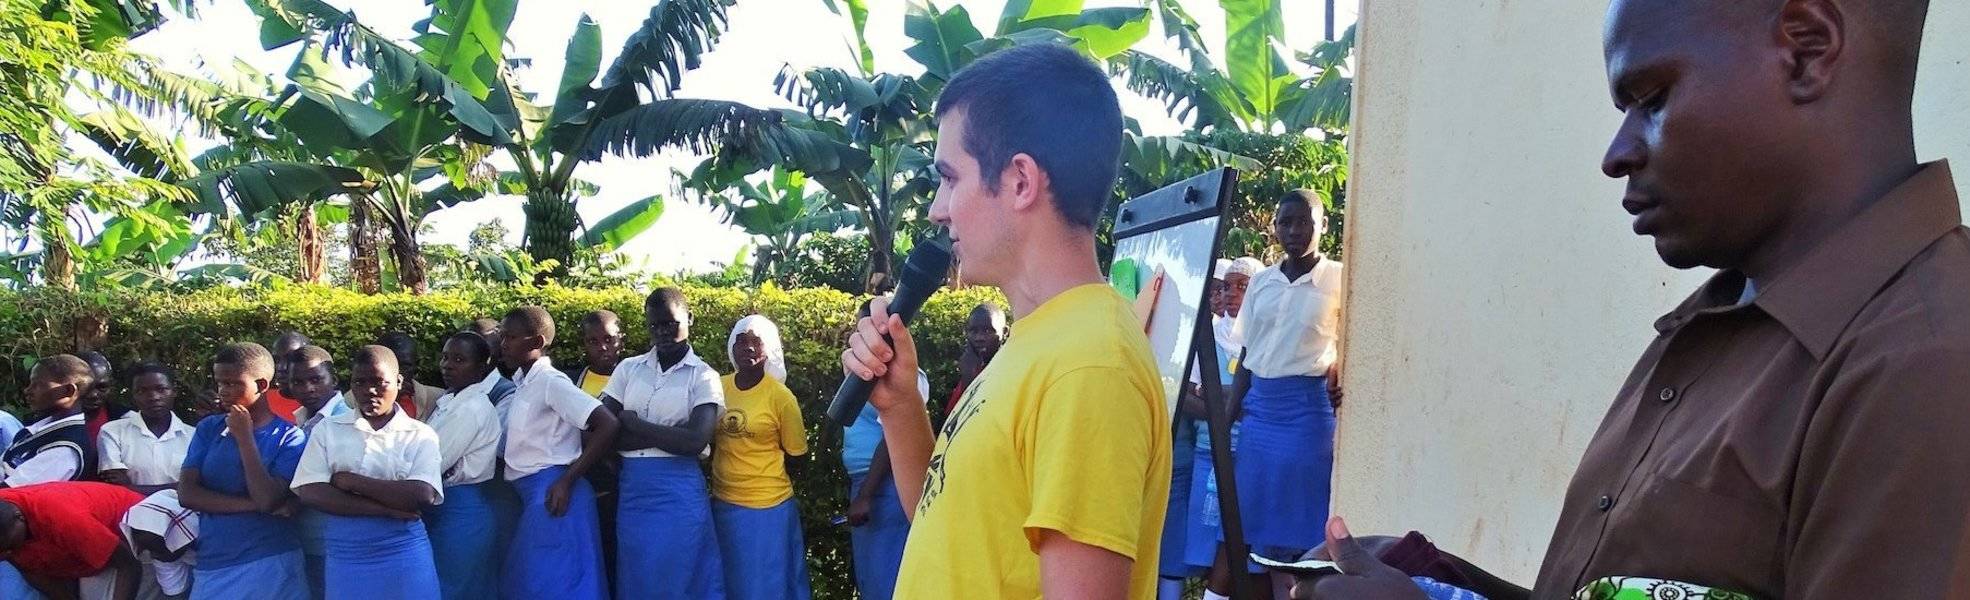 Volunteering ecological education Uganda NGO work